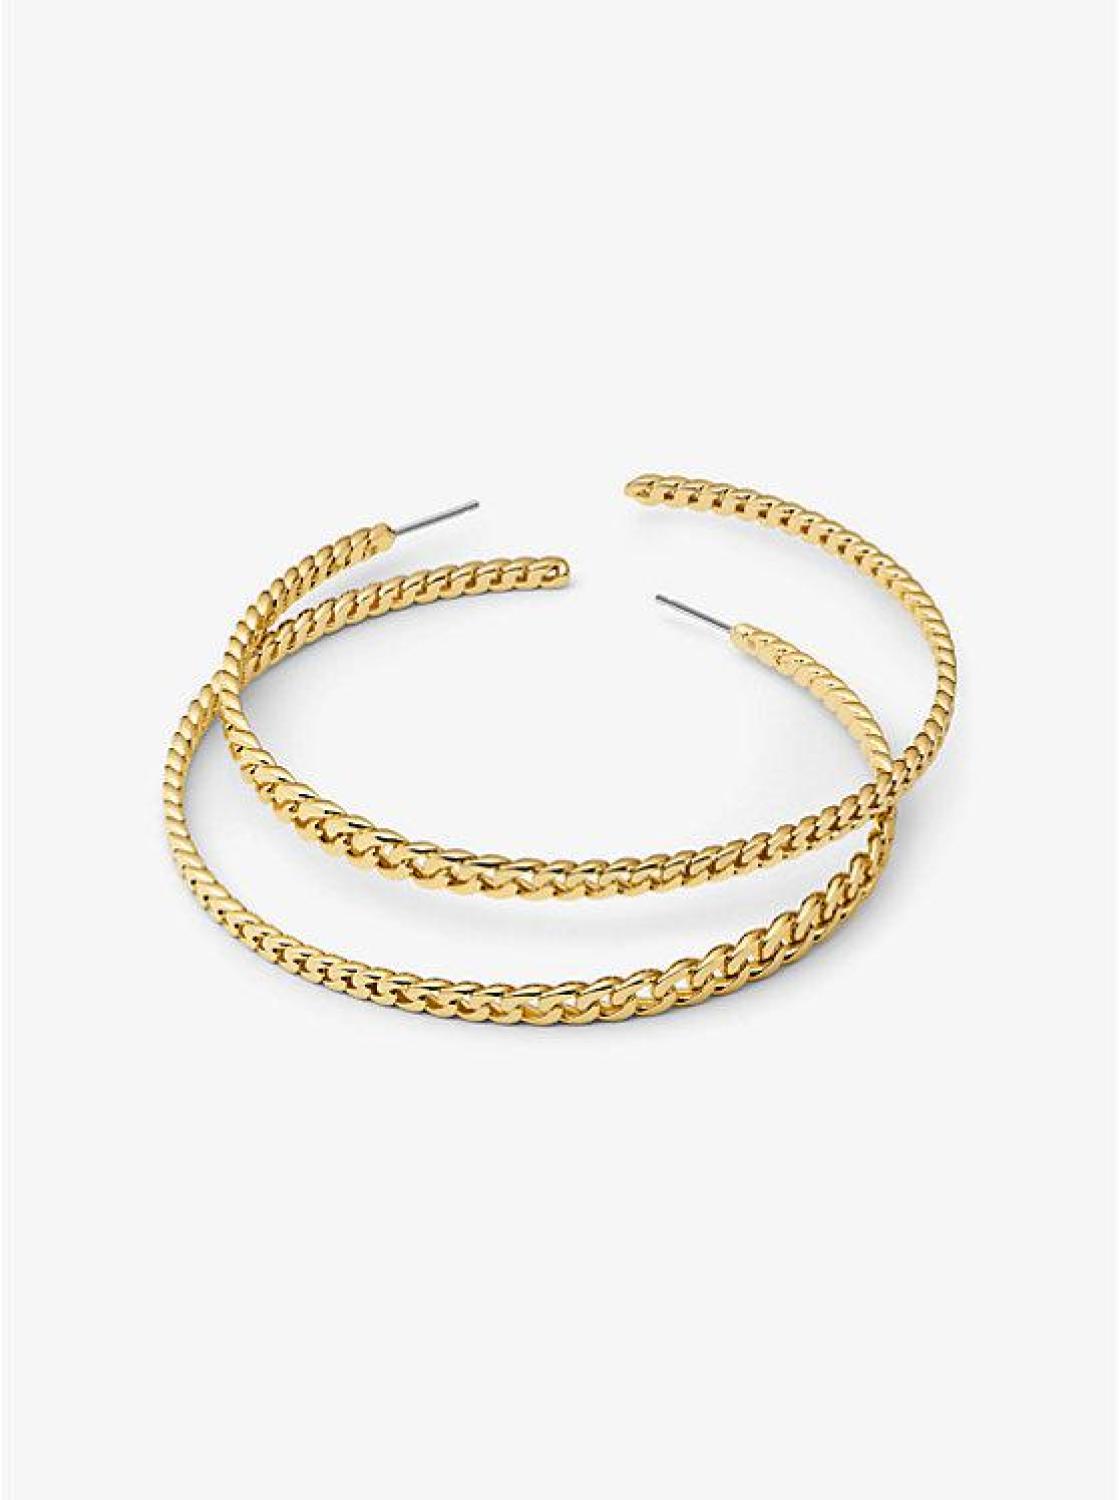 14K Gold-Plated Brass Curb Link Hoop Earrings